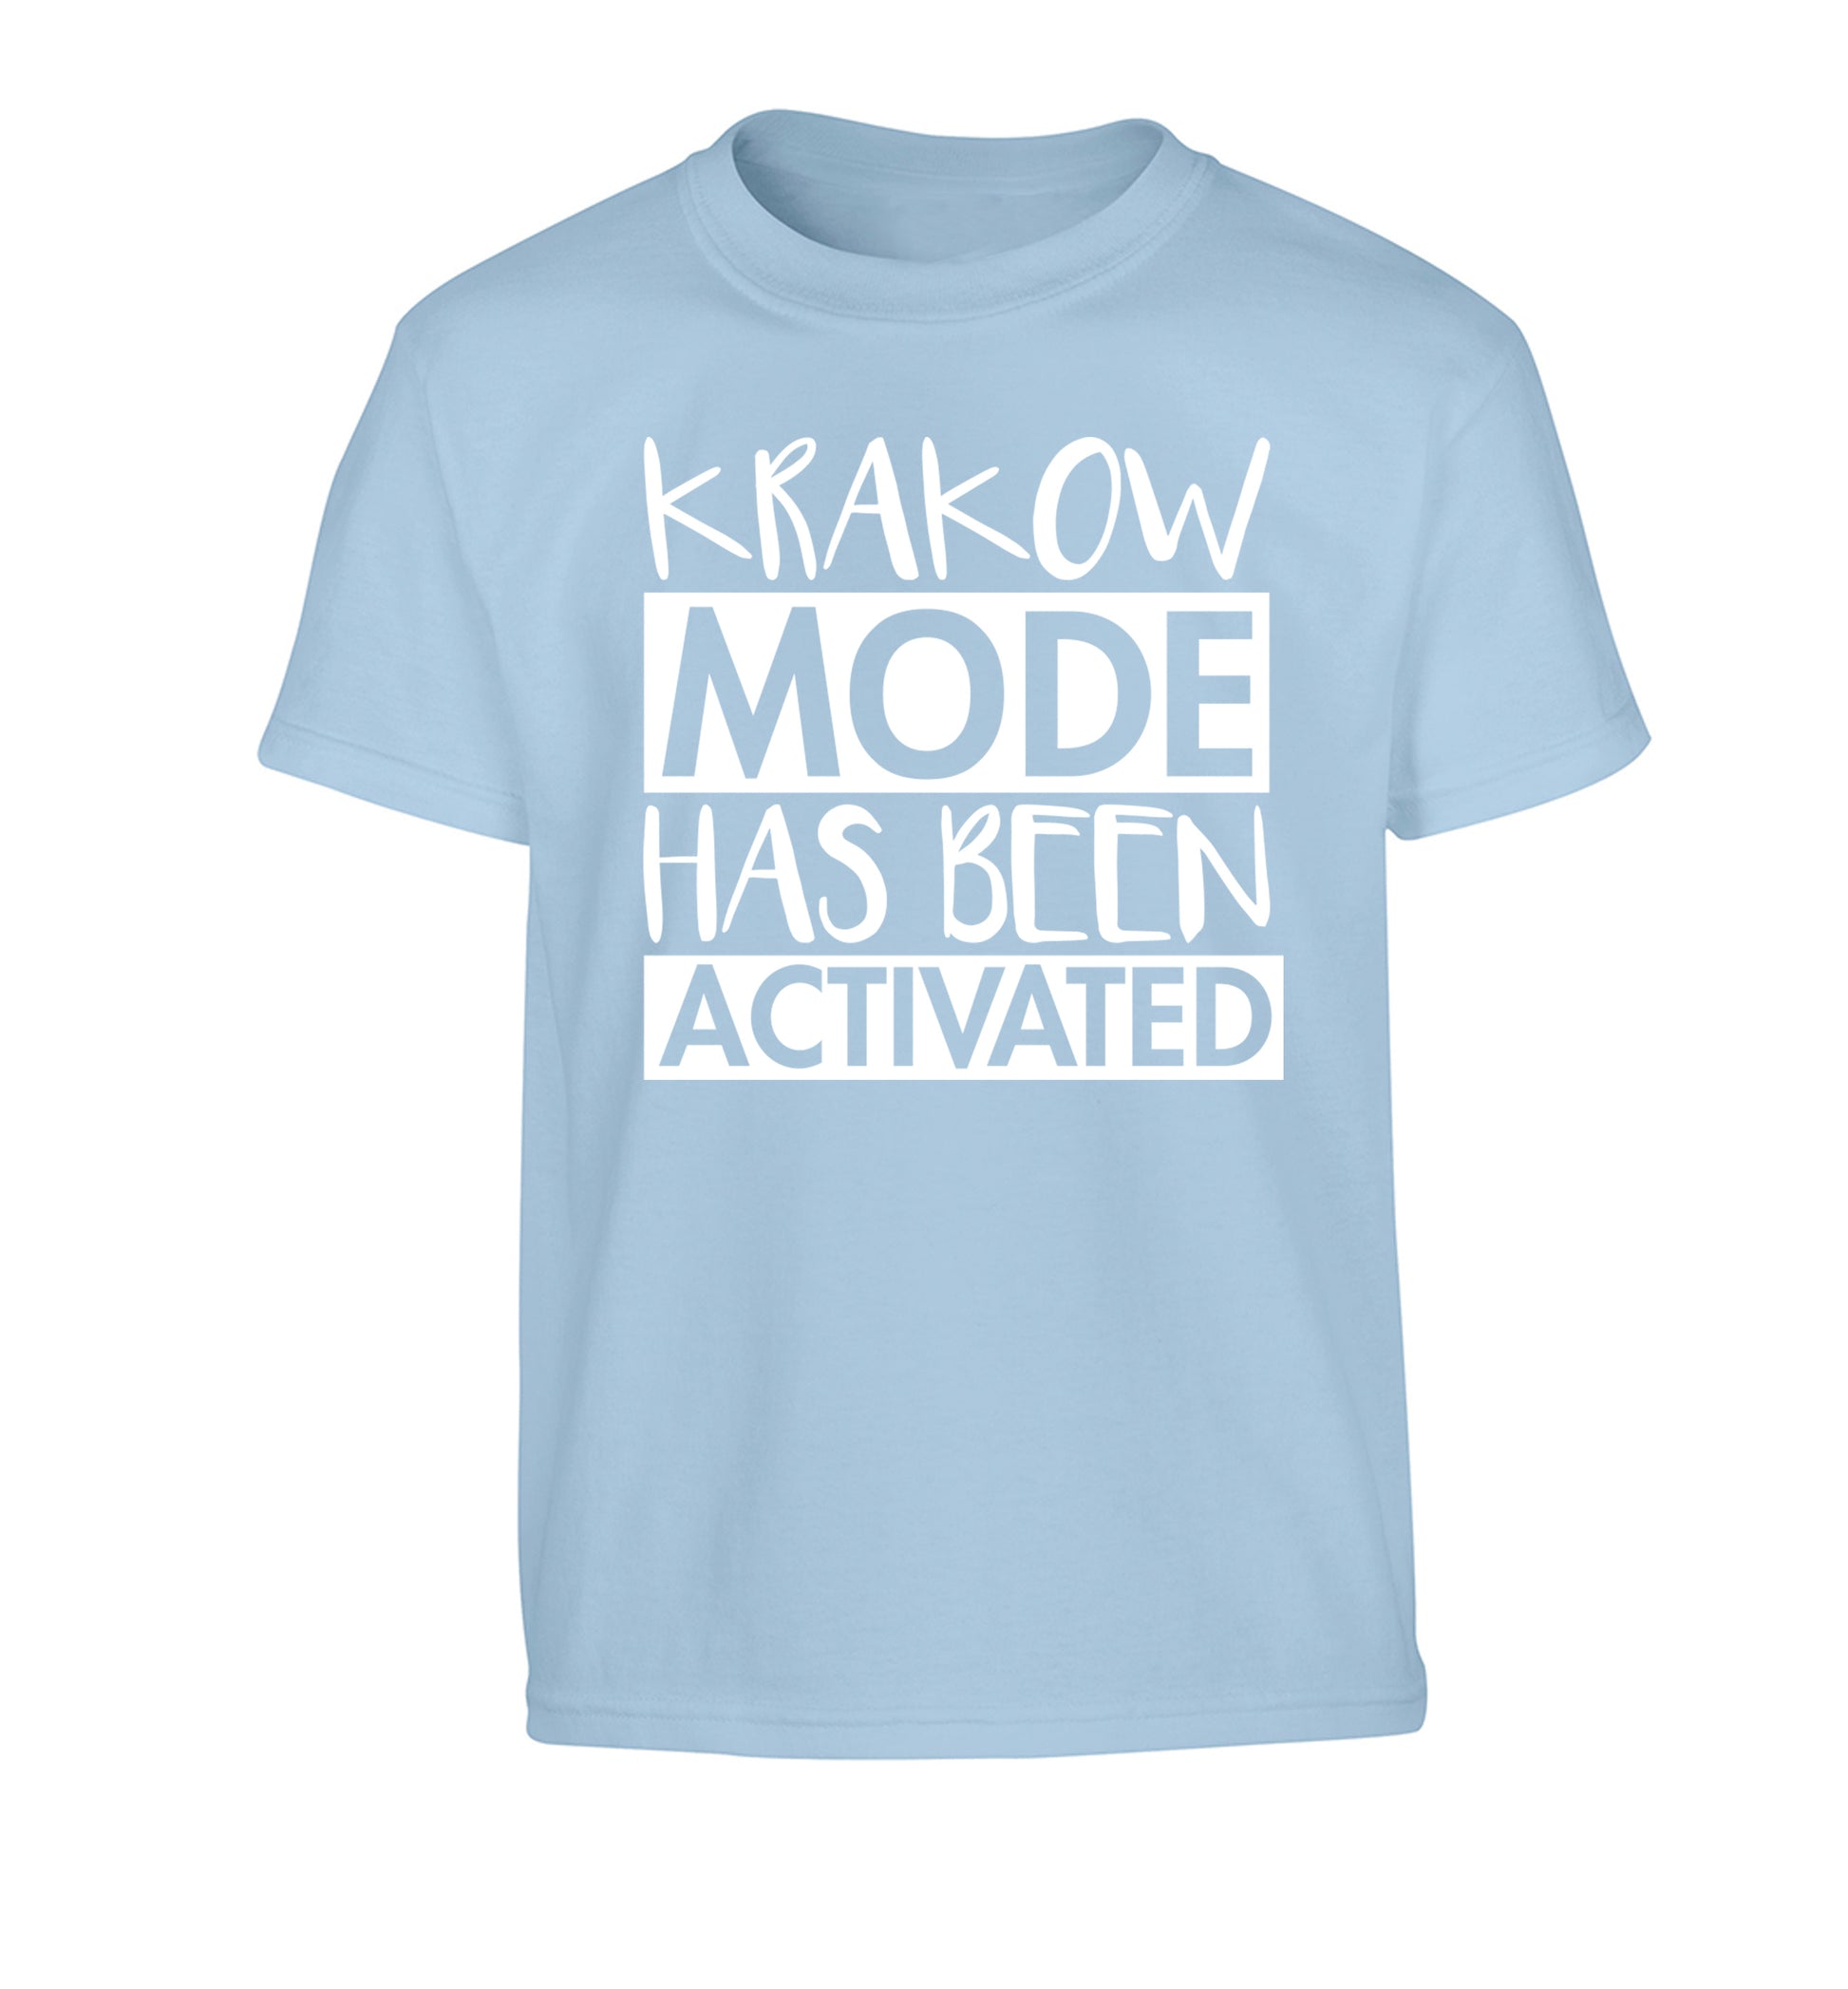 Krakow mode has been activated Children's light blue Tshirt 12-13 Years